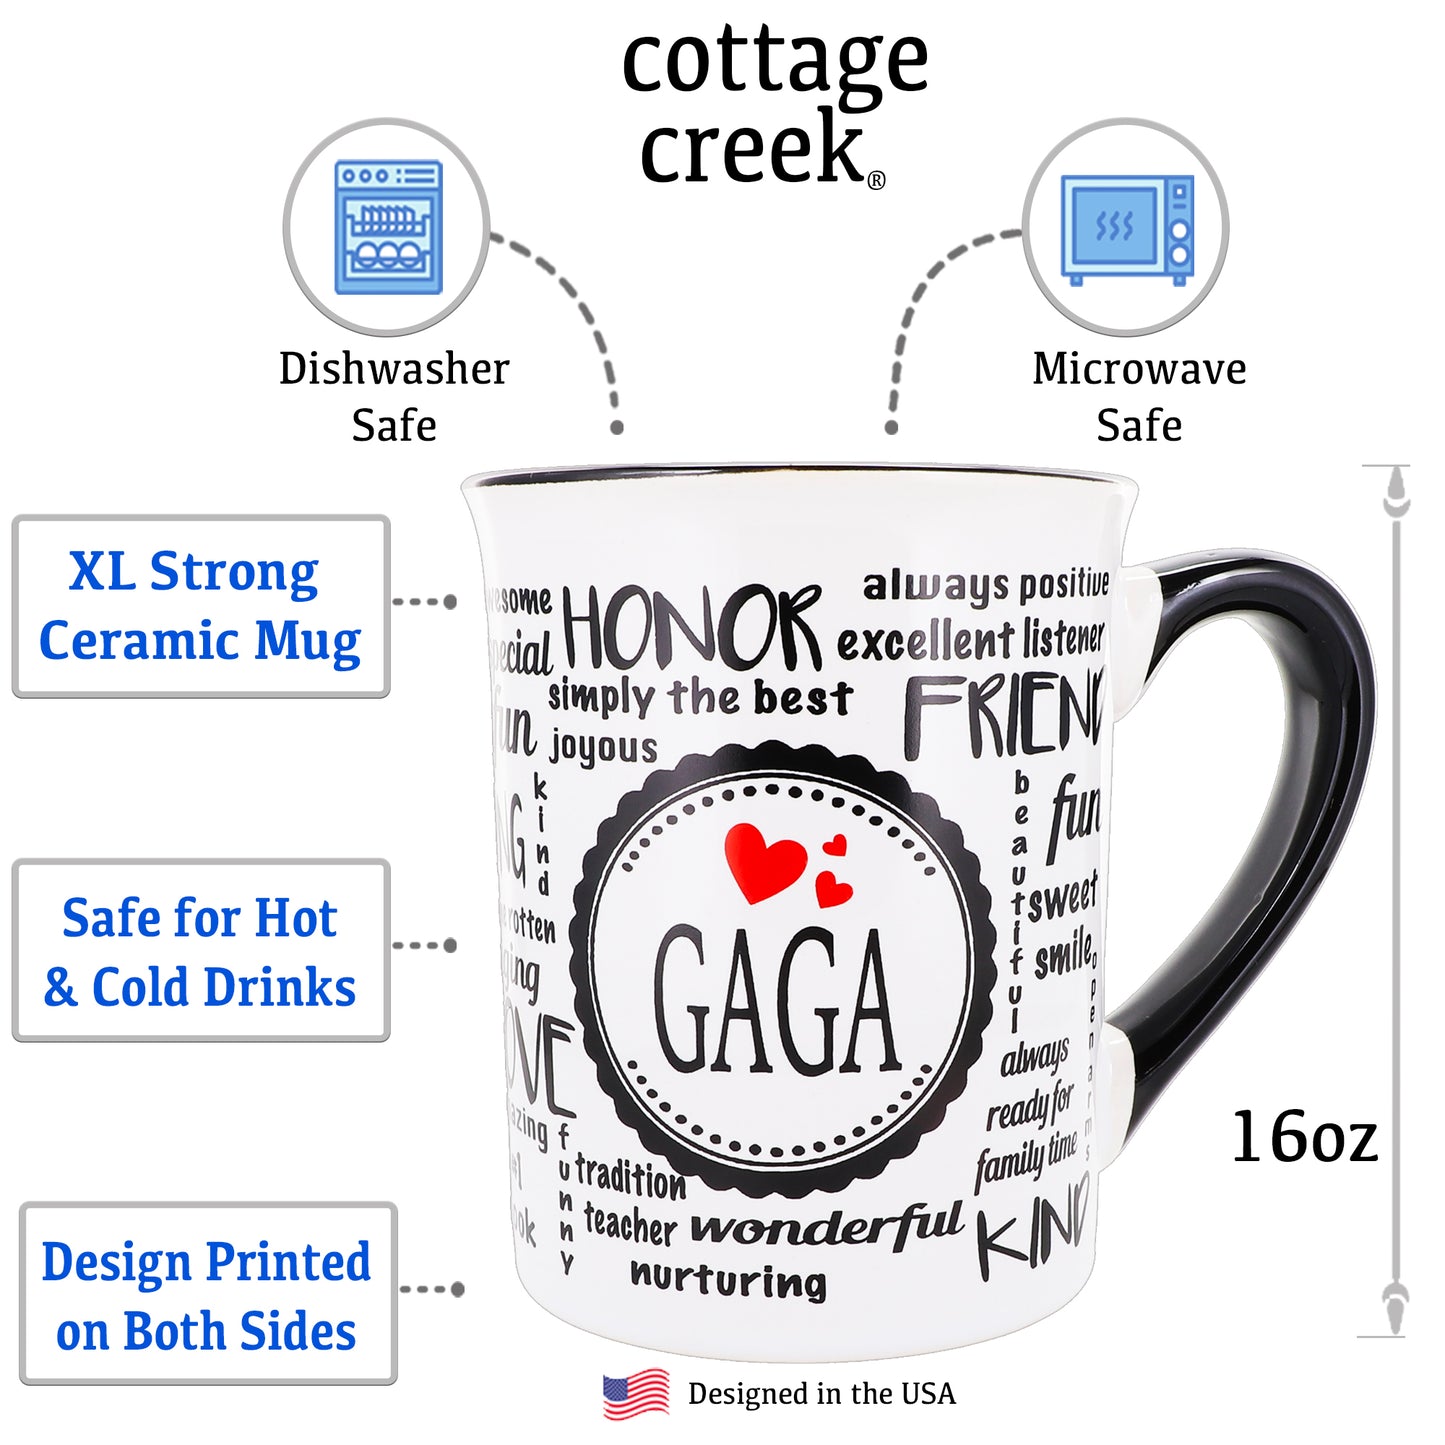 Cottage Creek Gaga Mug, Gaga Coffee Mug for Gaga, 16oz., 6" Multicolored